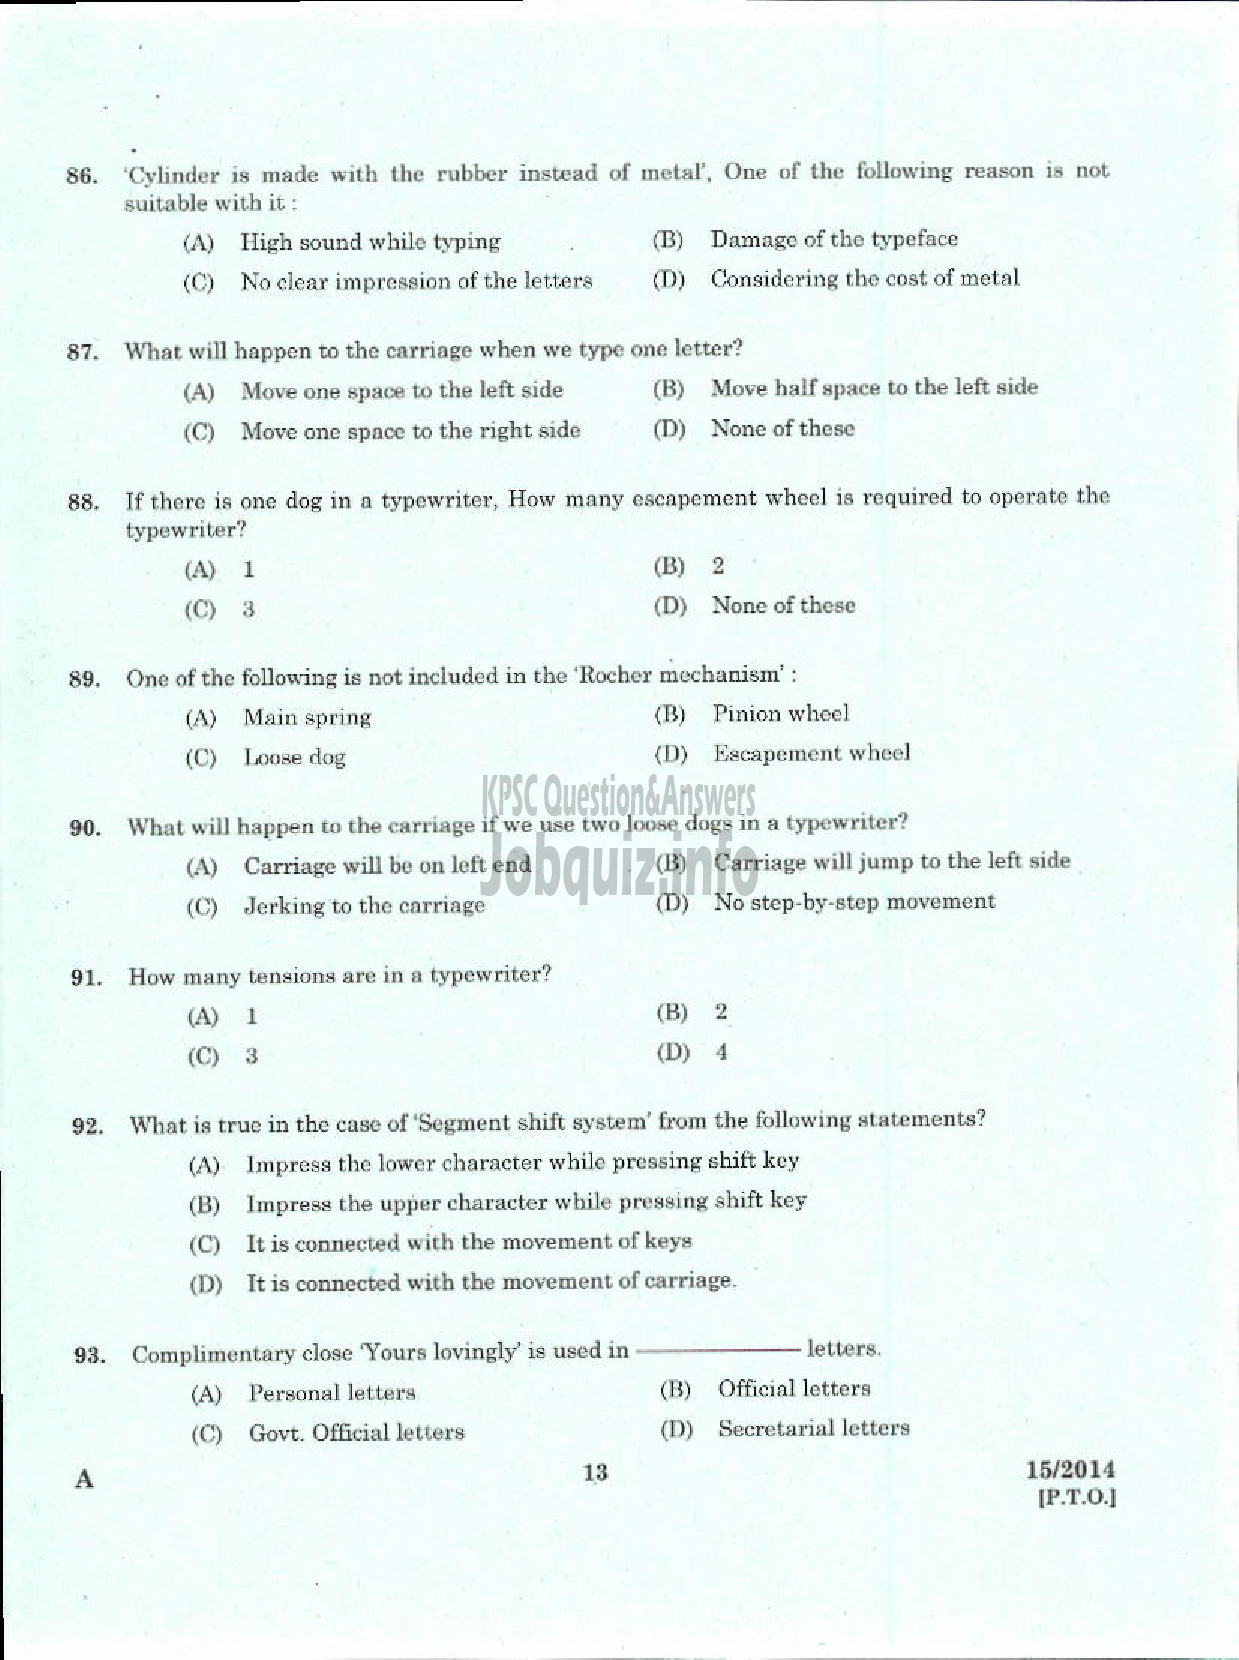 Kerala PSC Question Paper - LOWER DIVISION TYPIST SR FOR SC/ST VARIOUS-11